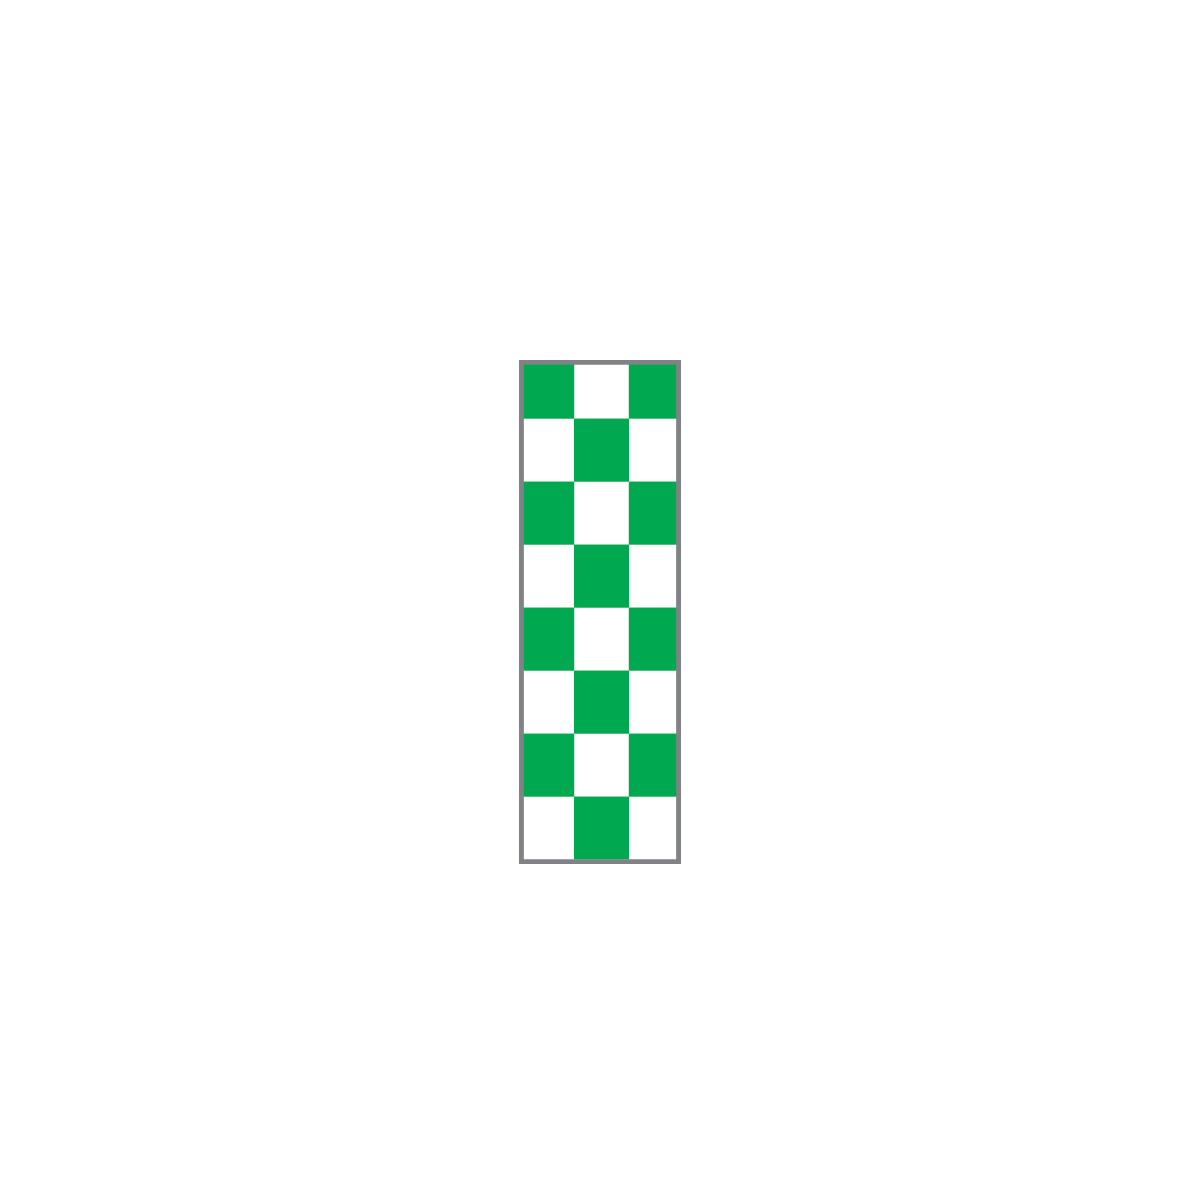 White/Green Squares Image